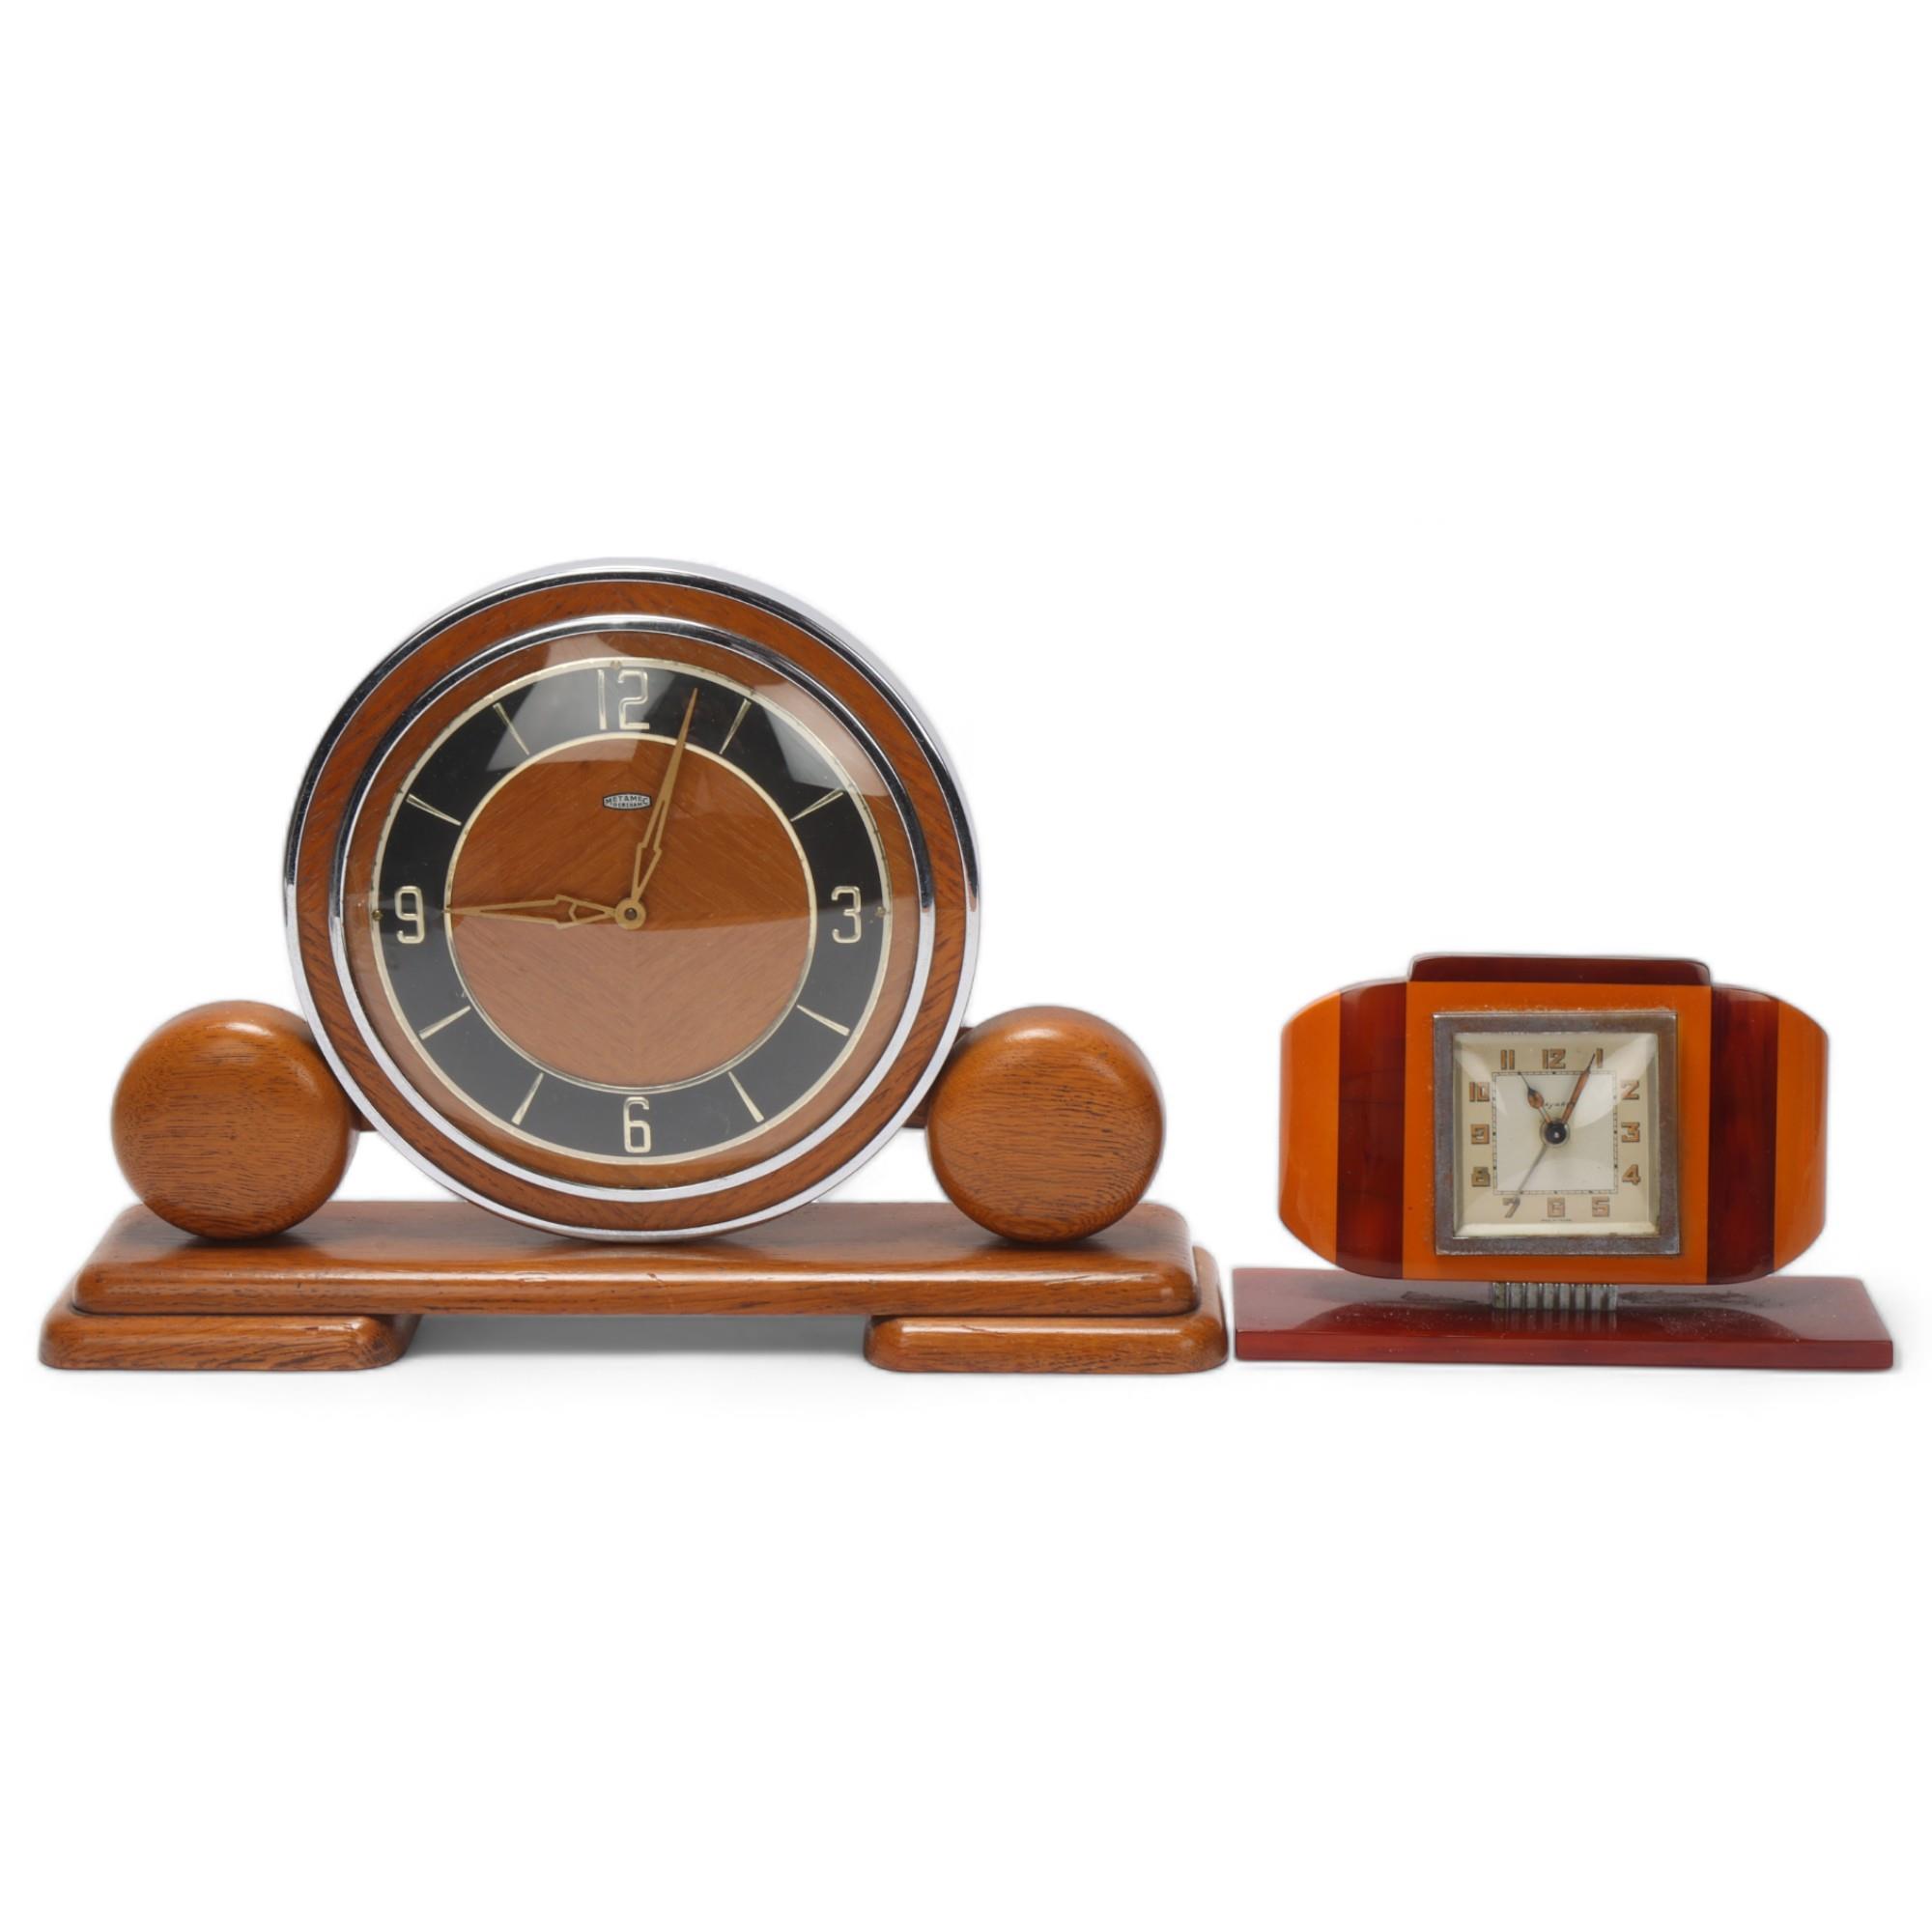 2 Art Deco mantel clocks, comprising a Bayard two-colour Bakelite-cased 8-day clock, length 17cm,